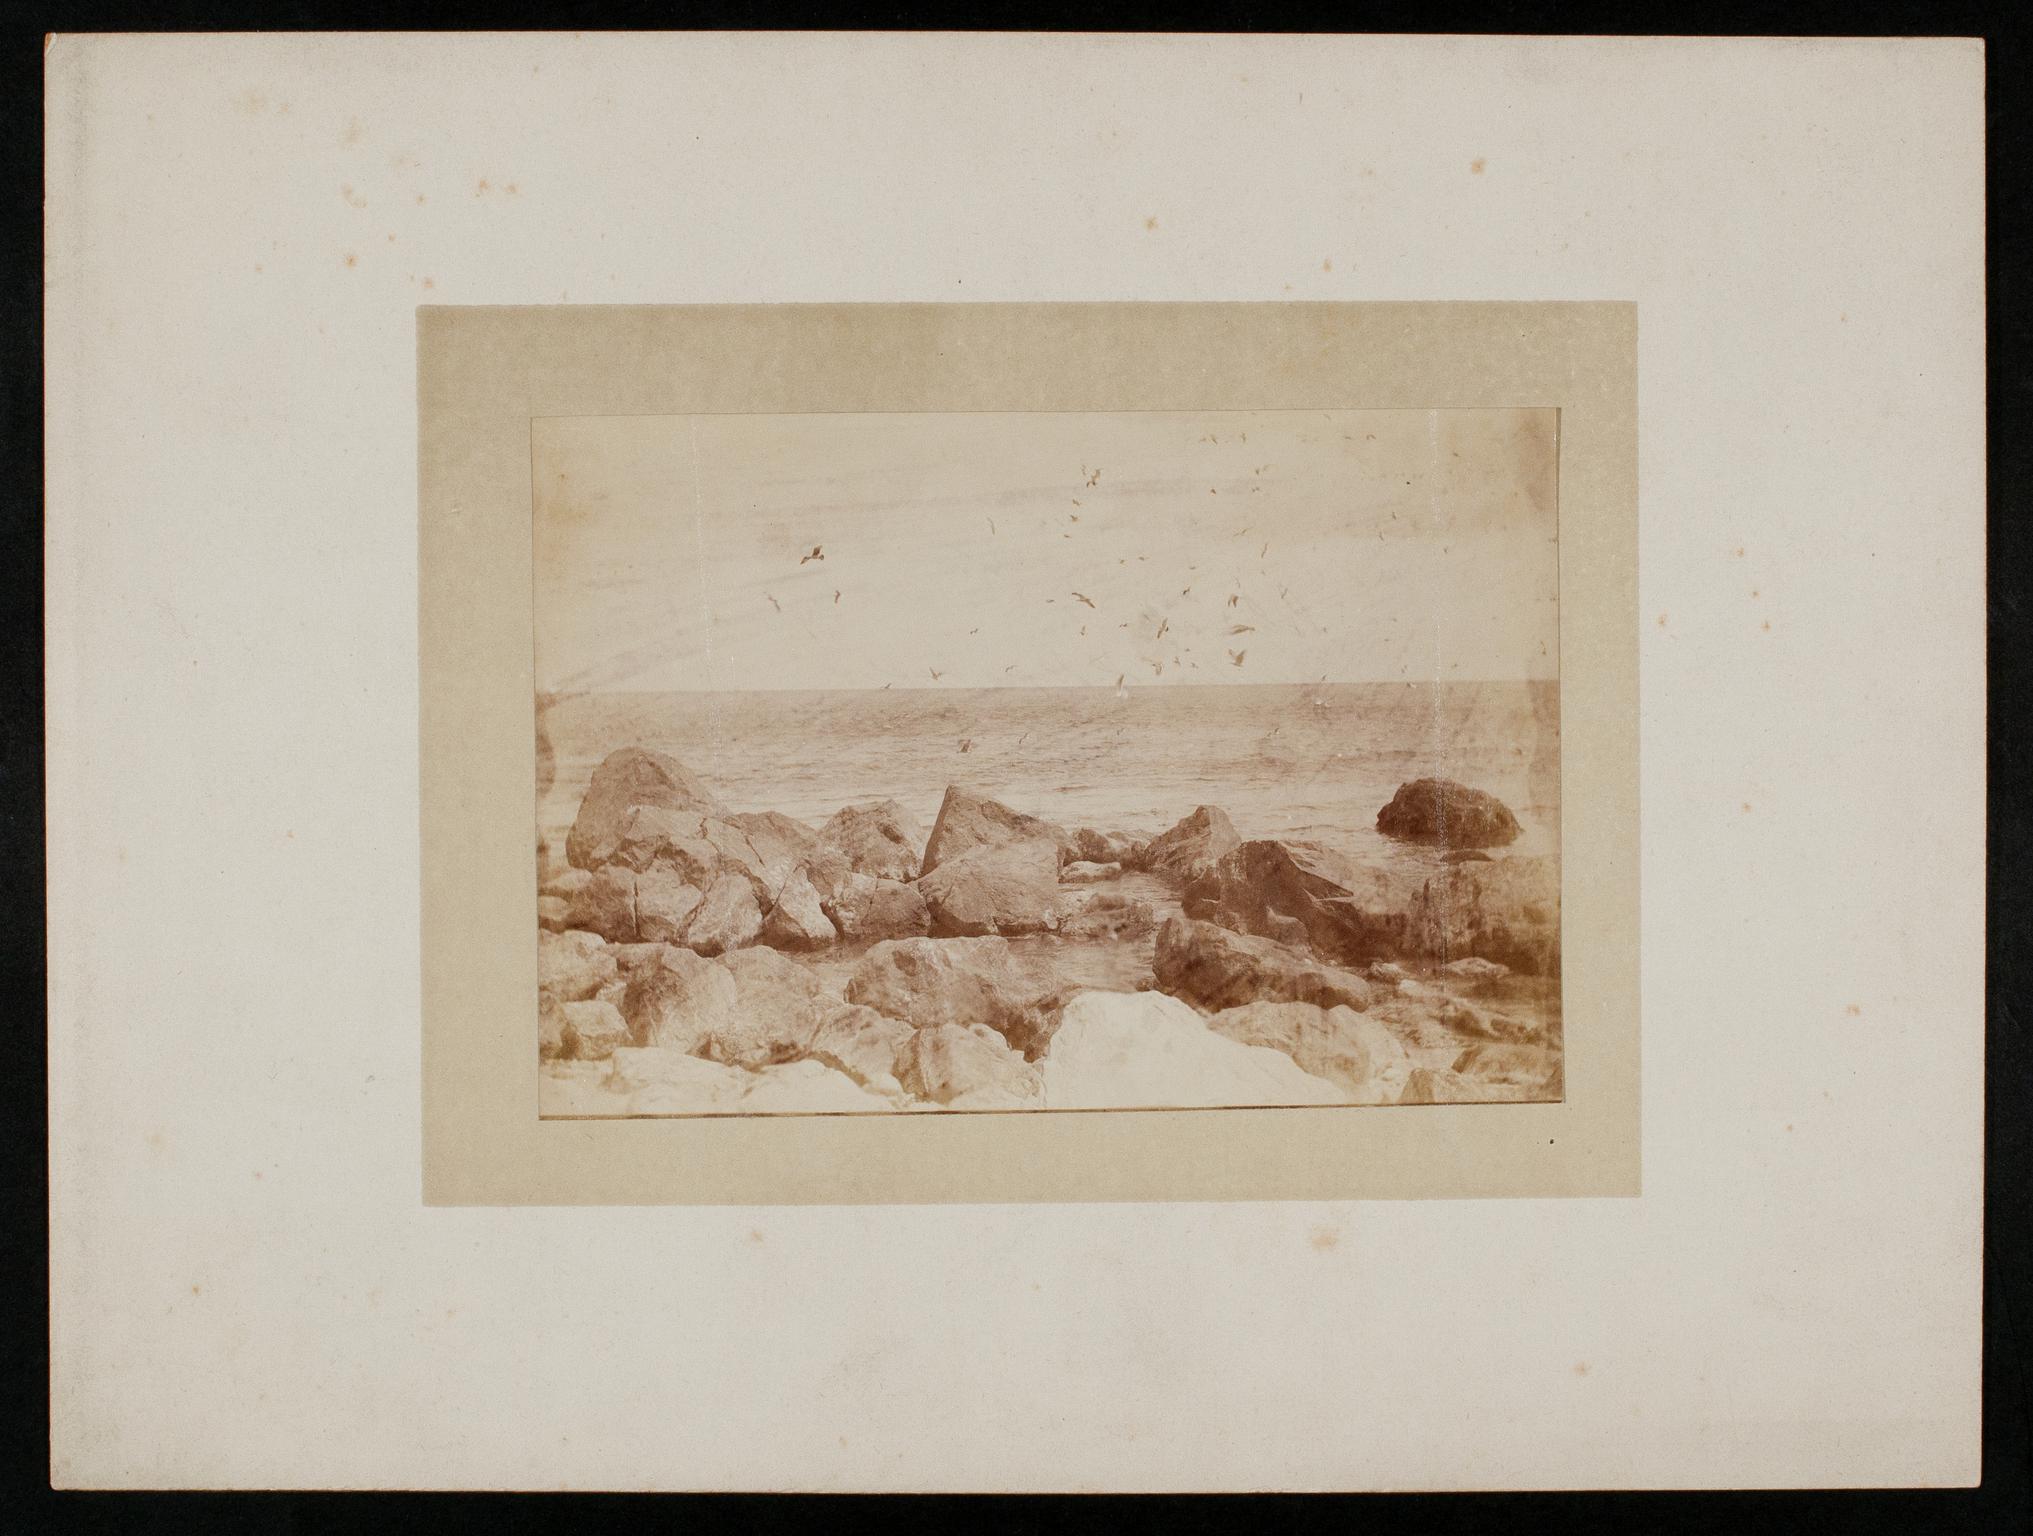 Rocks and sea, photograph